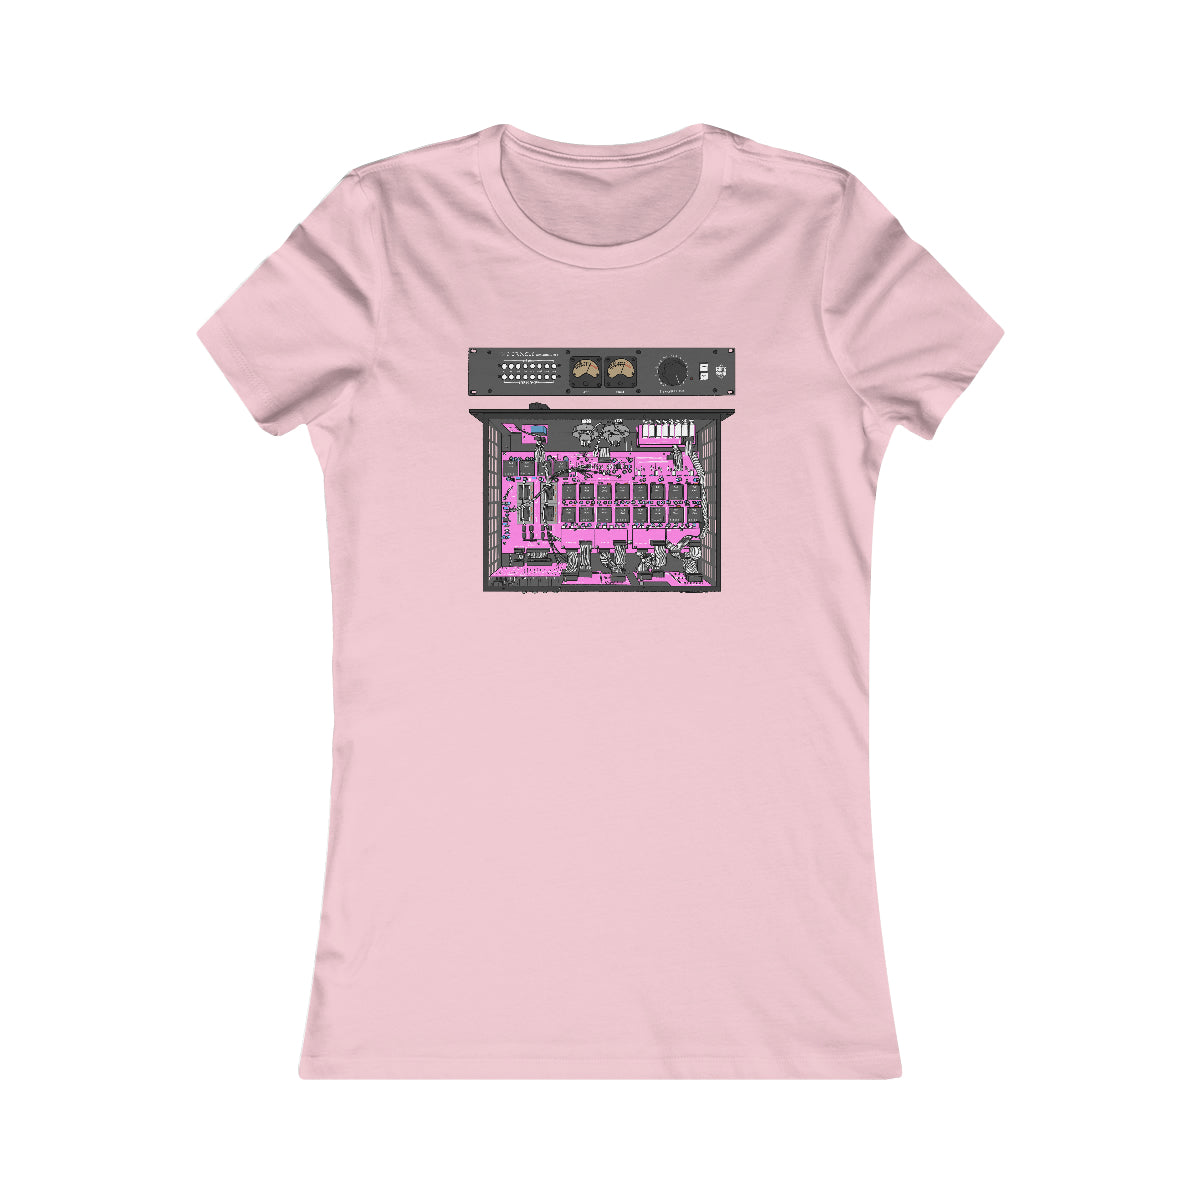 The Oracle Summing Mixer Pink PCB Woman's T-Shirt Pink